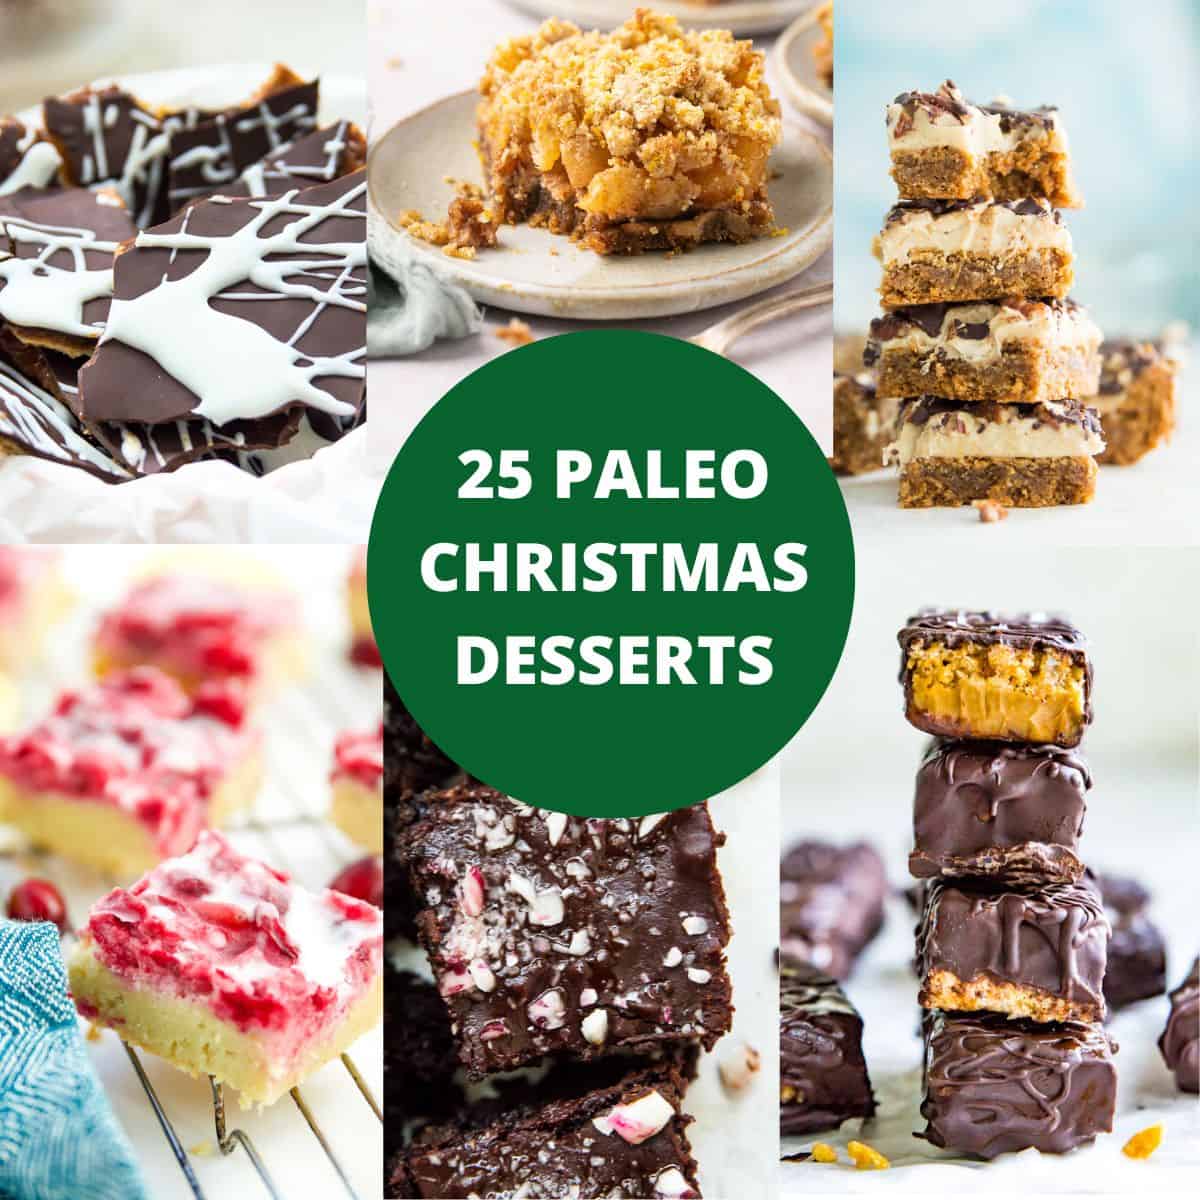 A collage of paleo Christmas dessert photos.